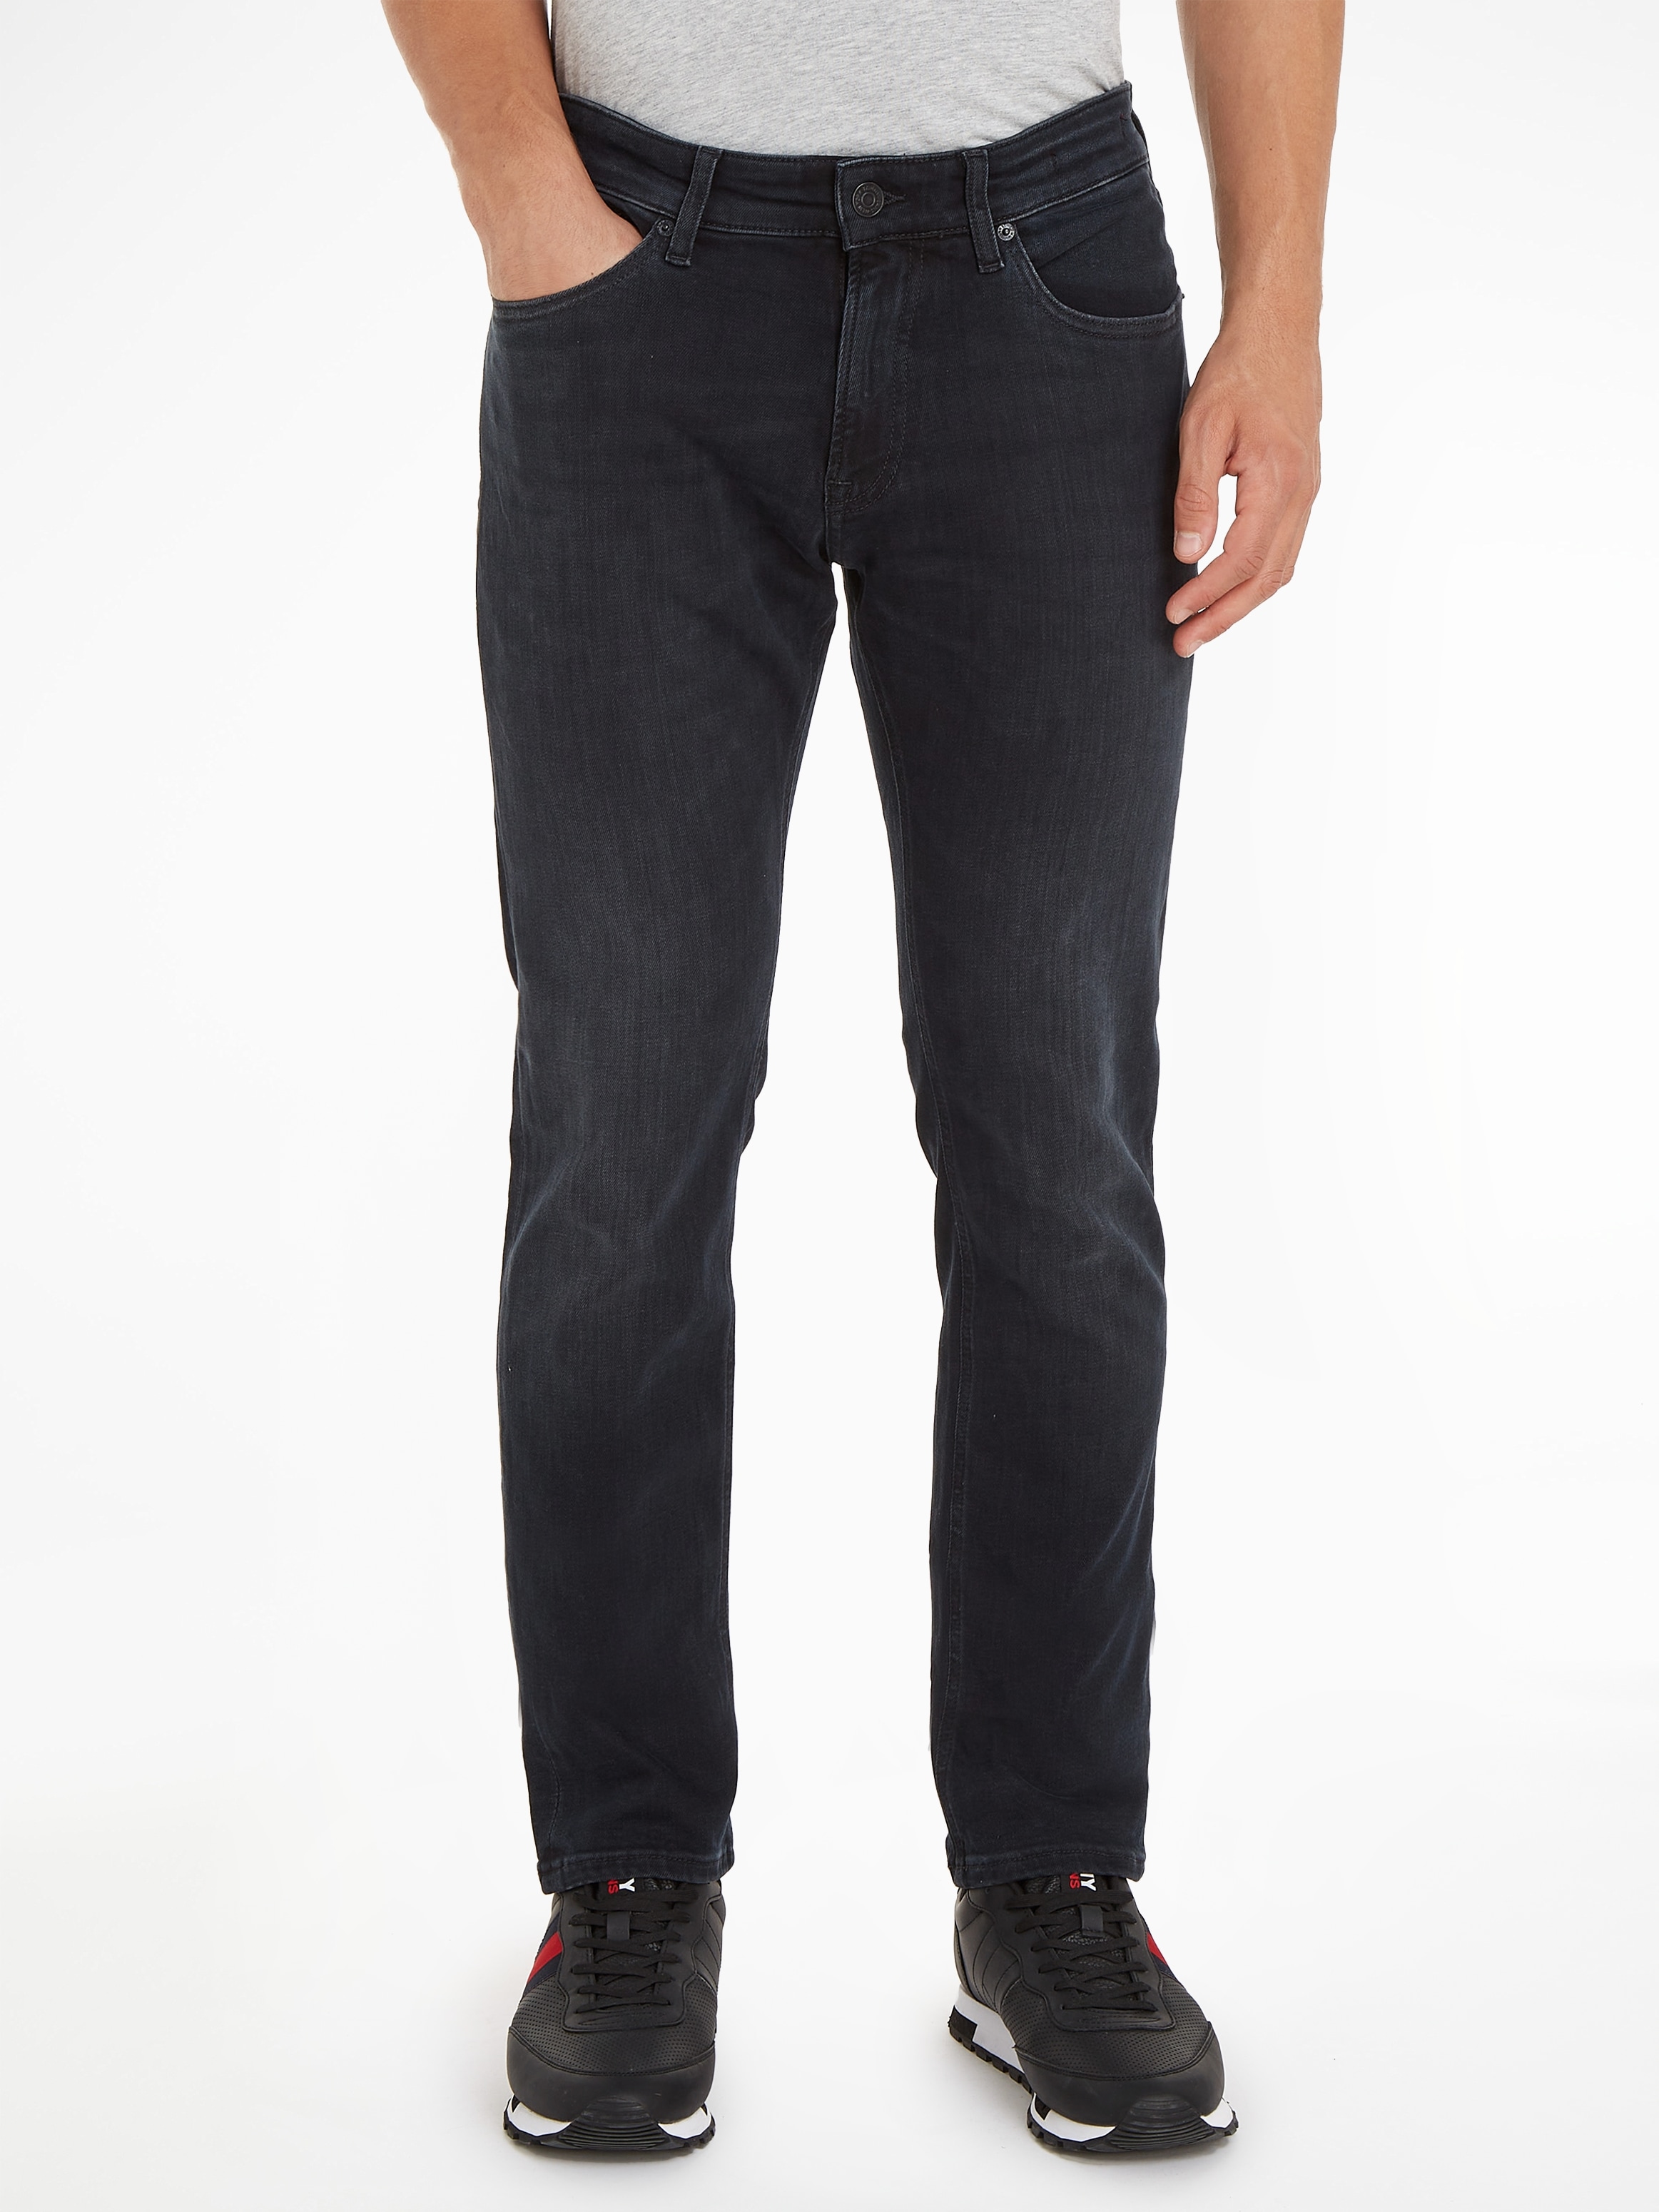 Jeans | »TJM BAUR Gürtelschlaufe im Tommy 3.5«, SCANTON Ledergürtel kaufen TJ-Design mit